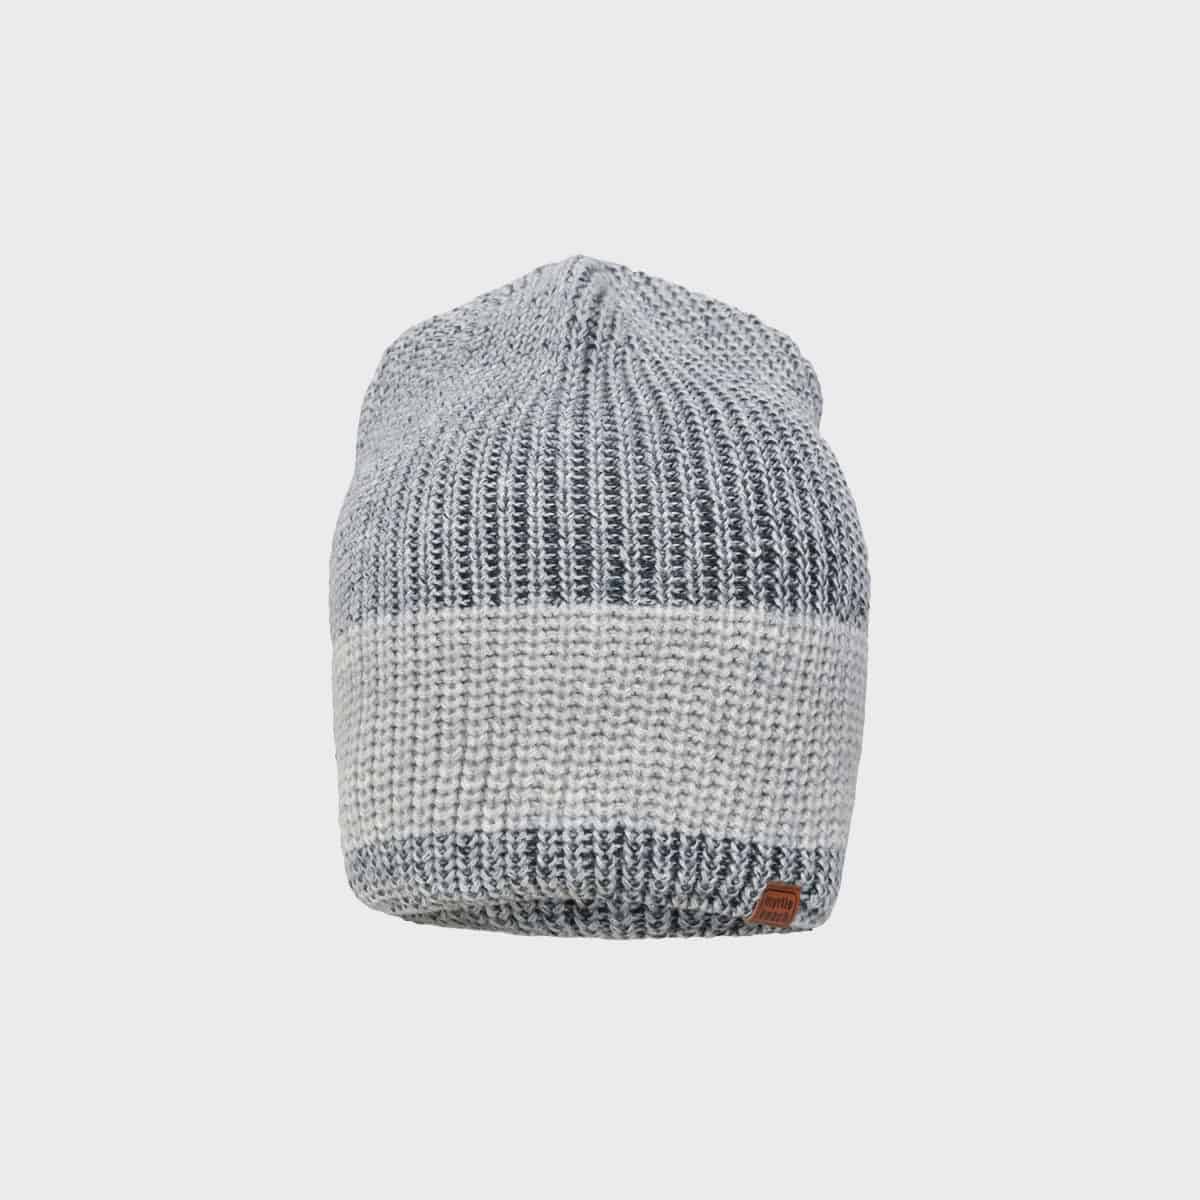 urban-knit-cap-glacier-grey-carbon-buy-embroider_manufacture